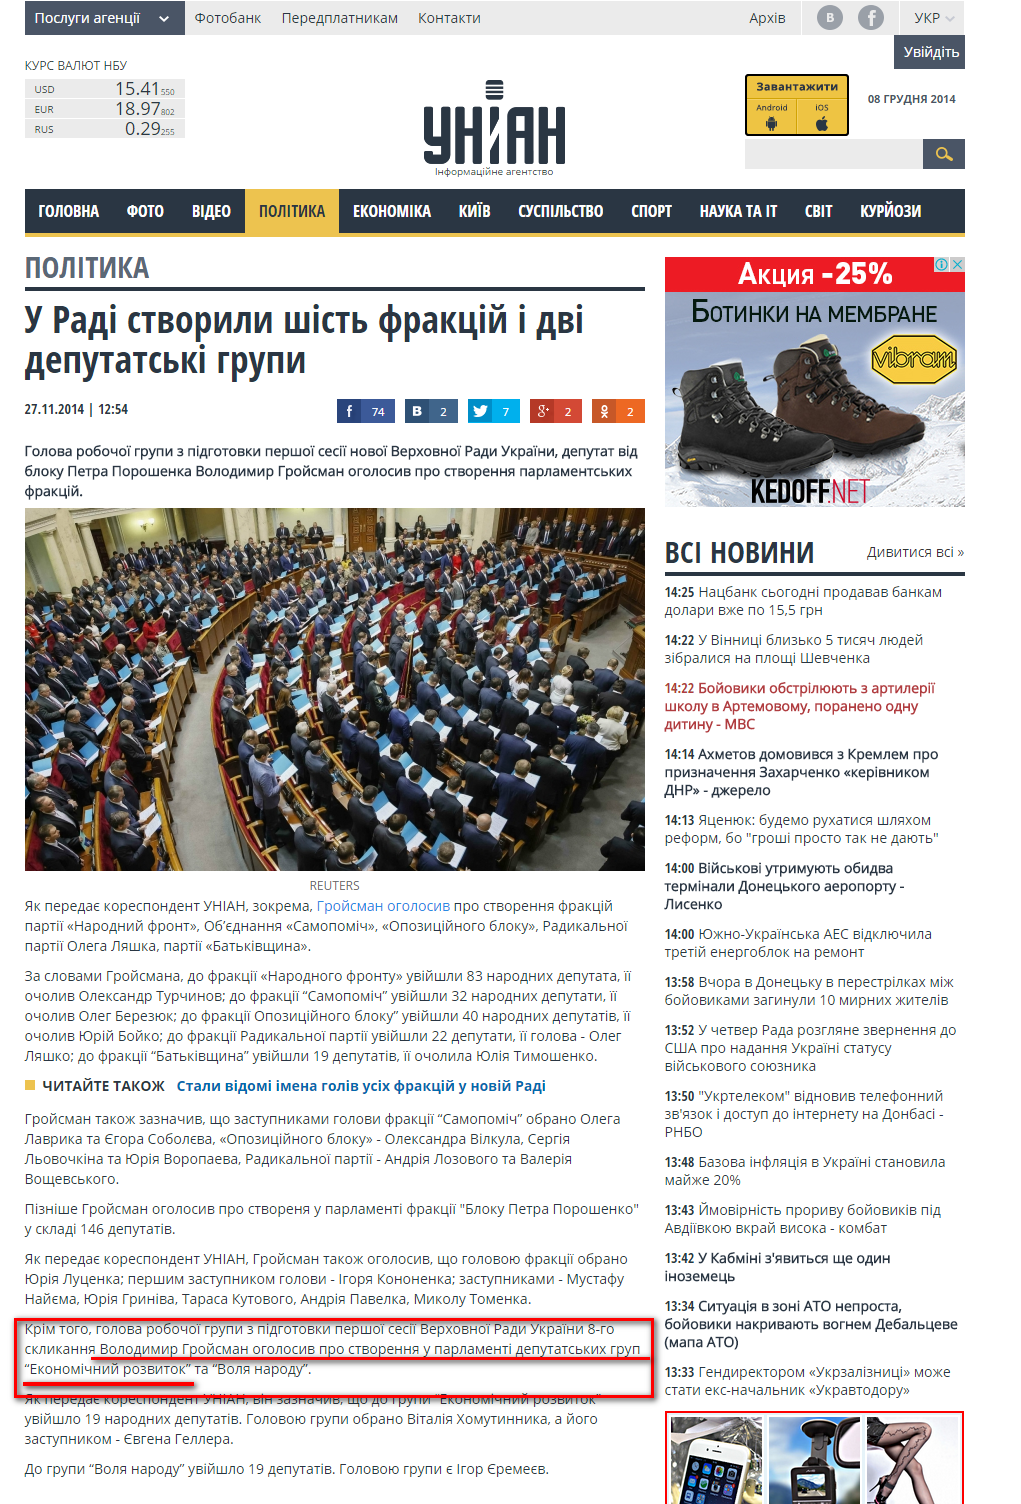 http://www.unian.ua/politics/1014581-u-radi-stvorili-shist-fraktsiy-i-dvi-deputatski-grupi.html